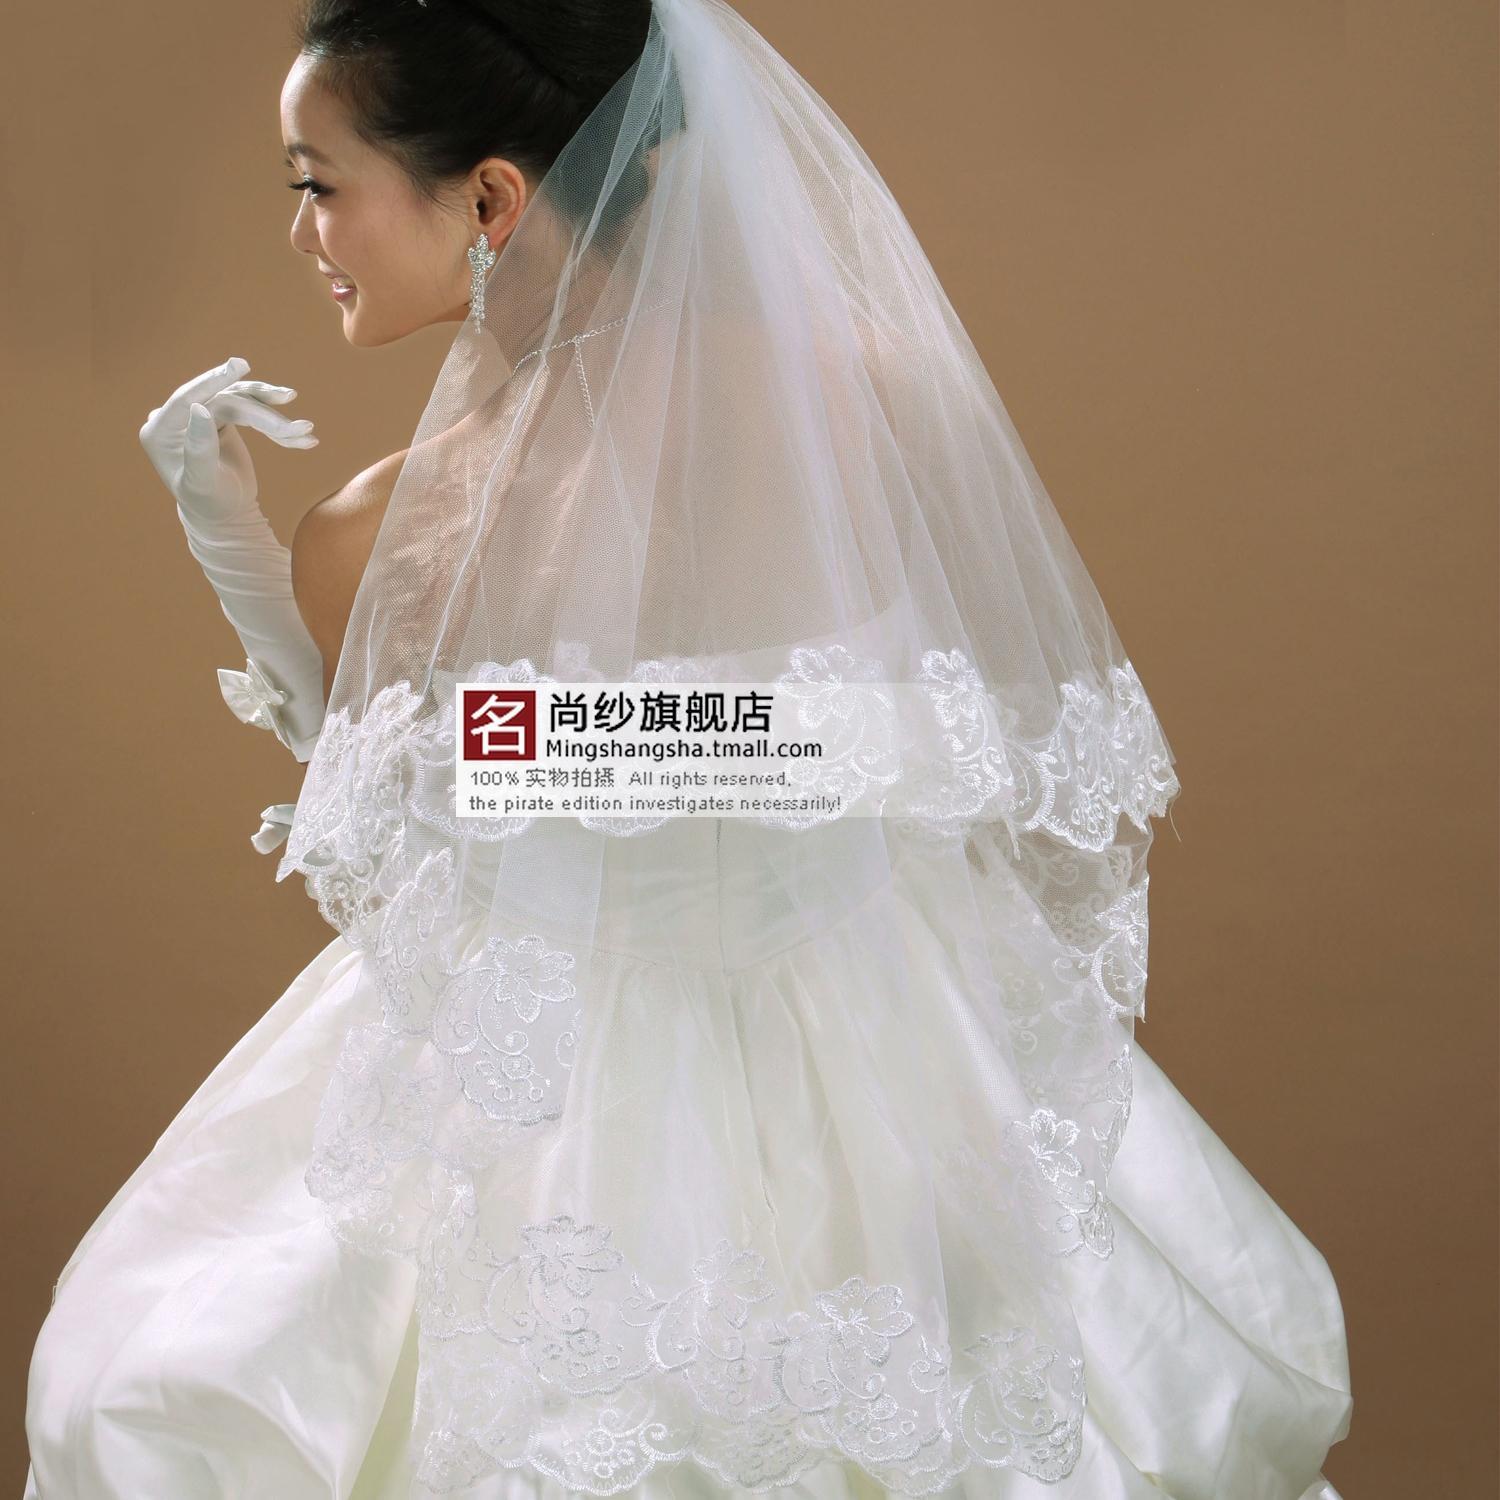 MSS Yarn quality gold laciness veil laciness bridal veil quality bridal veil s-015